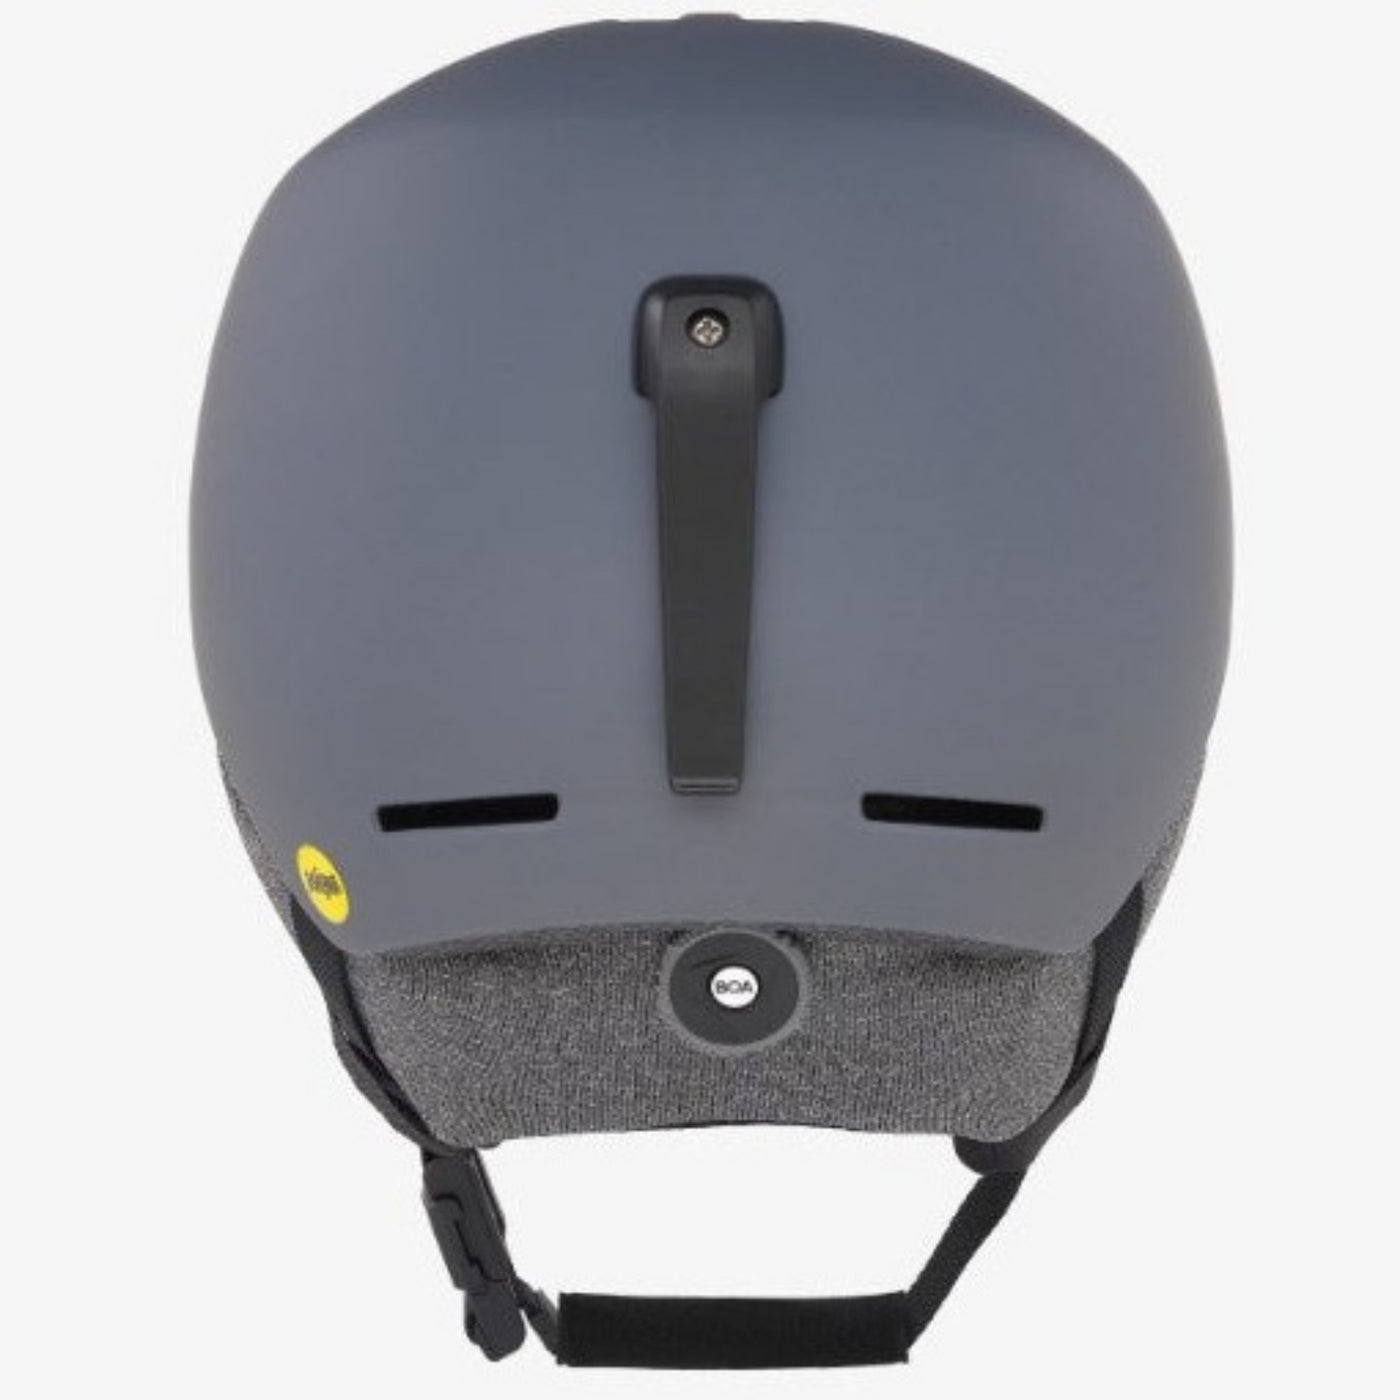 Oakley MOD1 MIPS Snow Helmet - Forged Iron